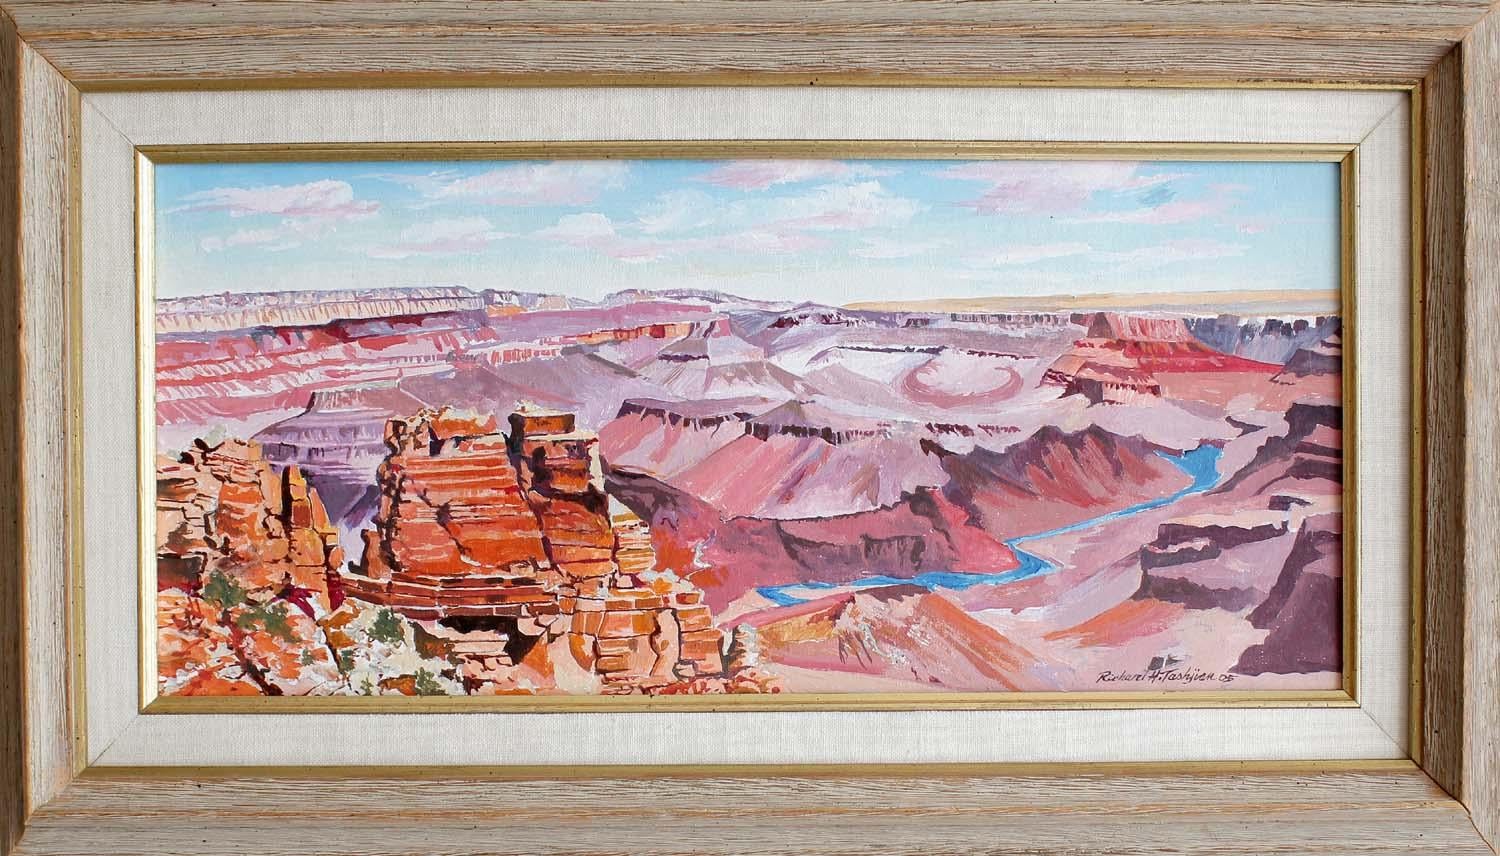 South Rim, Grand Canyon - Painting by Richard H. Tashjian